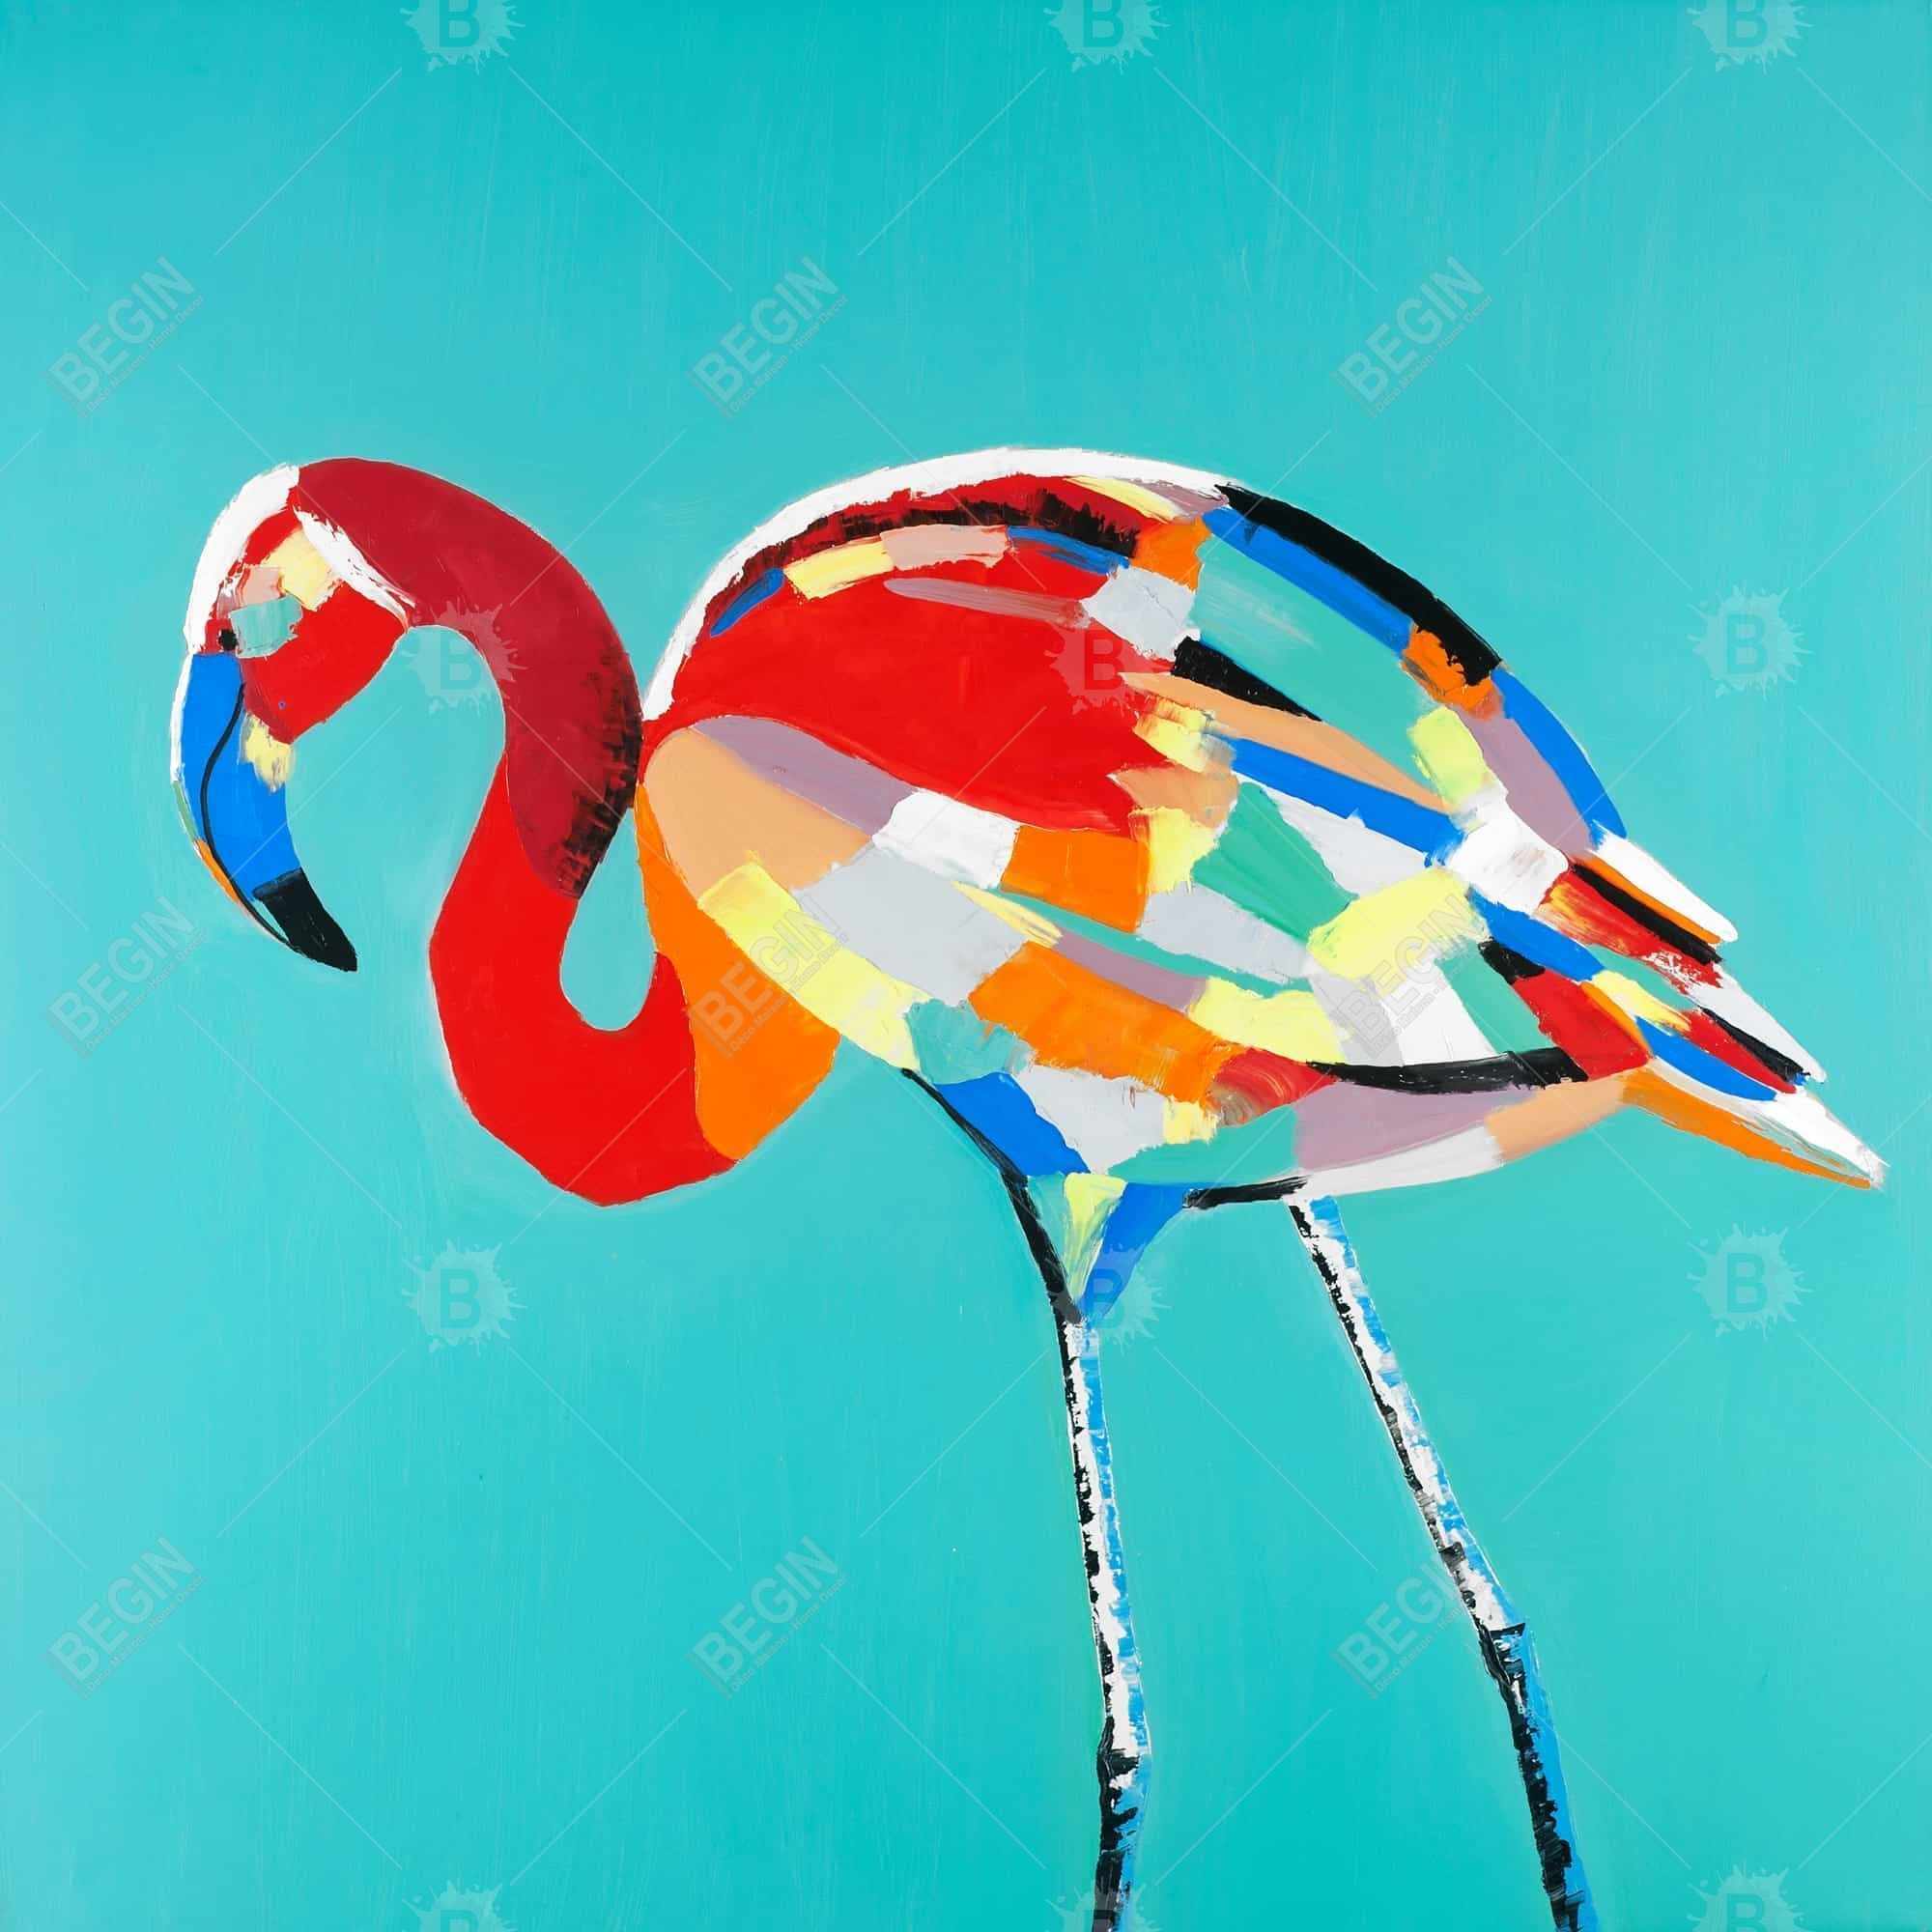 Abstract flamingo